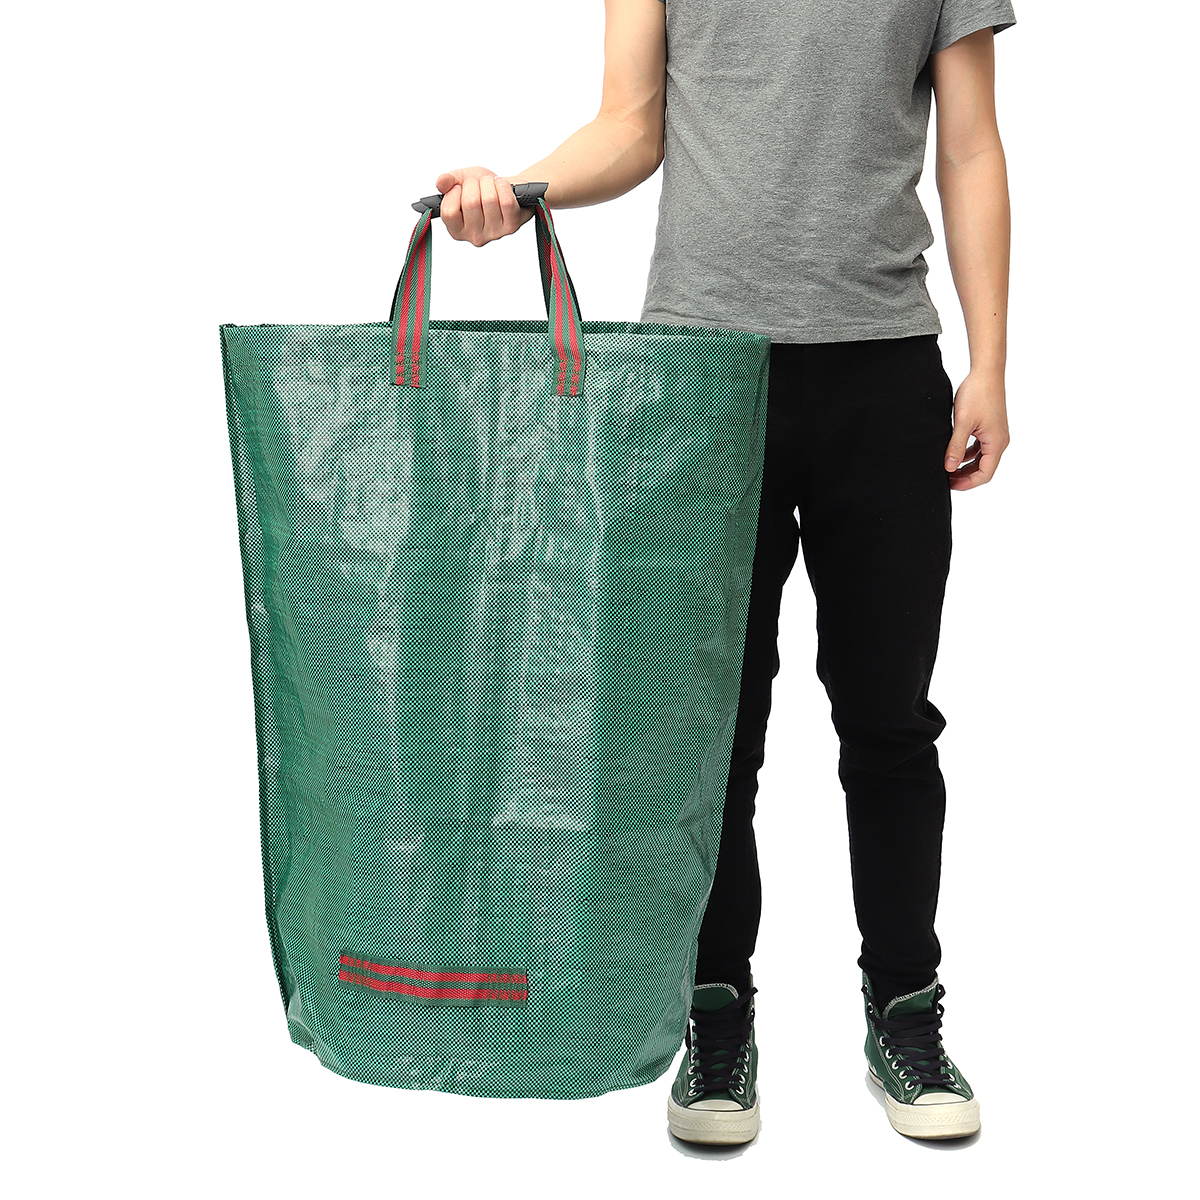 Strong-Garden-Bag-Waste-Refuse-Rubbish-Grass-Sack-Reusable-Heavy-Duty-Large-Trash-Bag-1434320-4